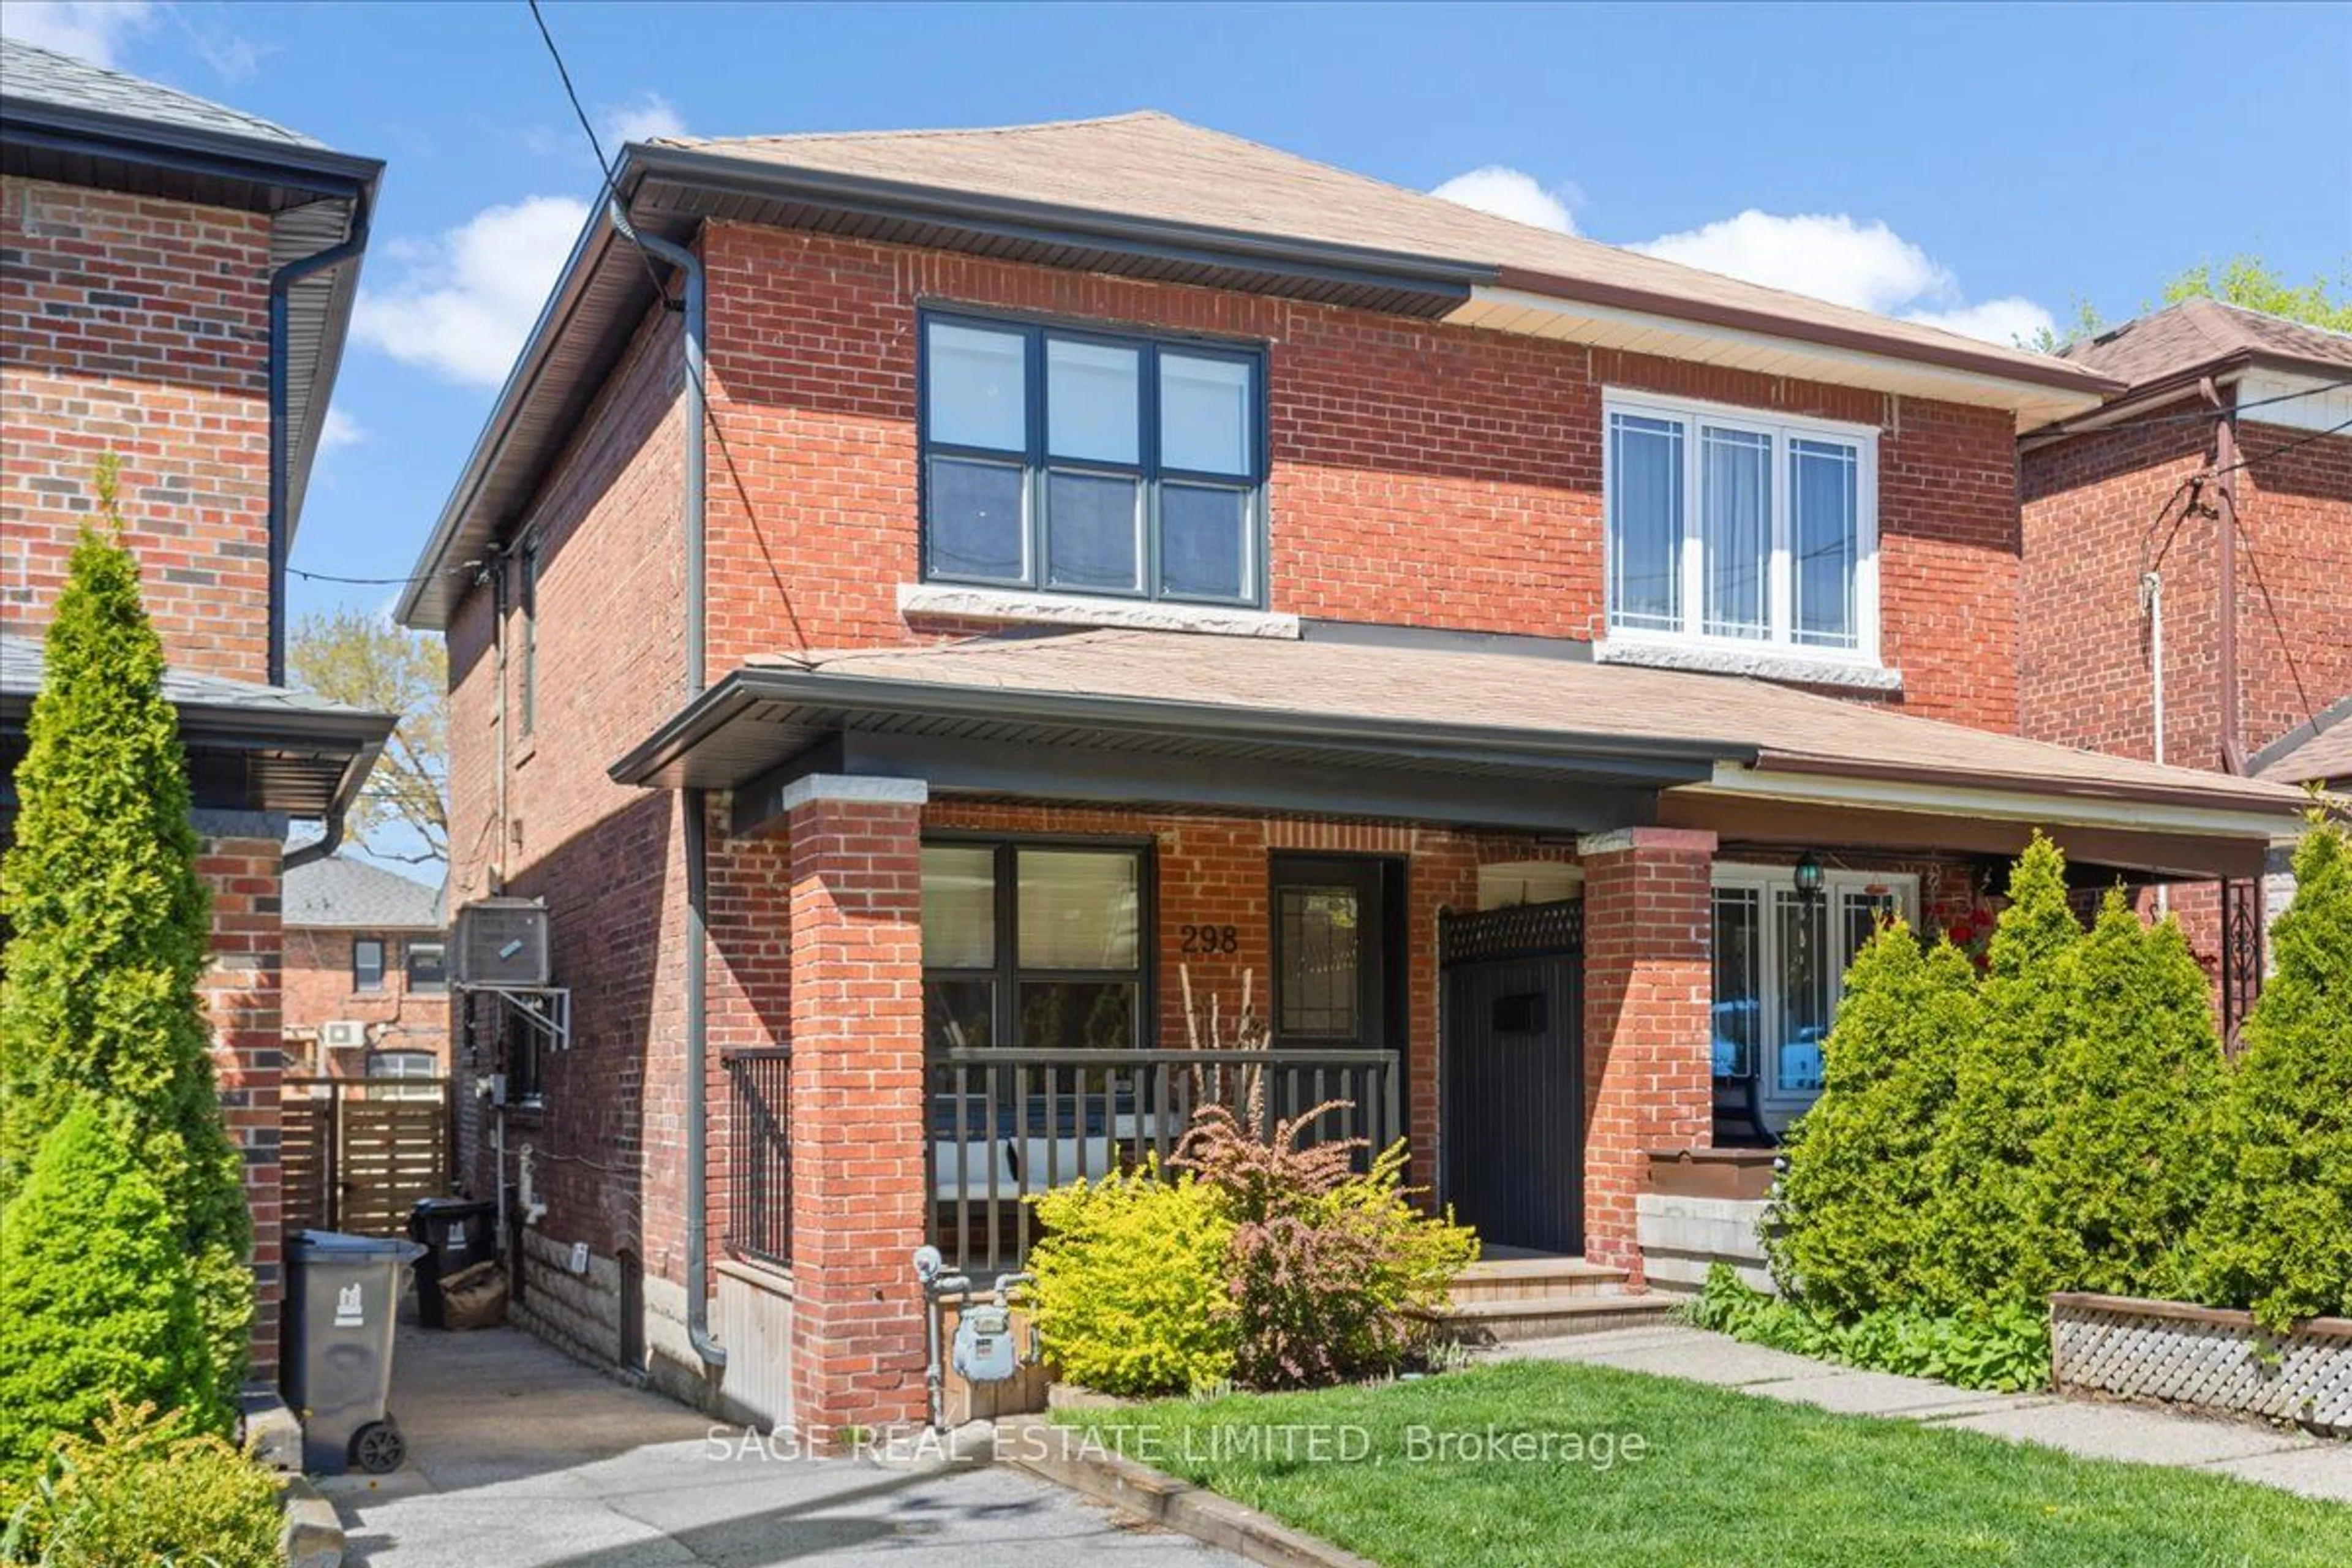 Home with brick exterior material for 298 Arlington Ave, Toronto Ontario M6C 2Z7